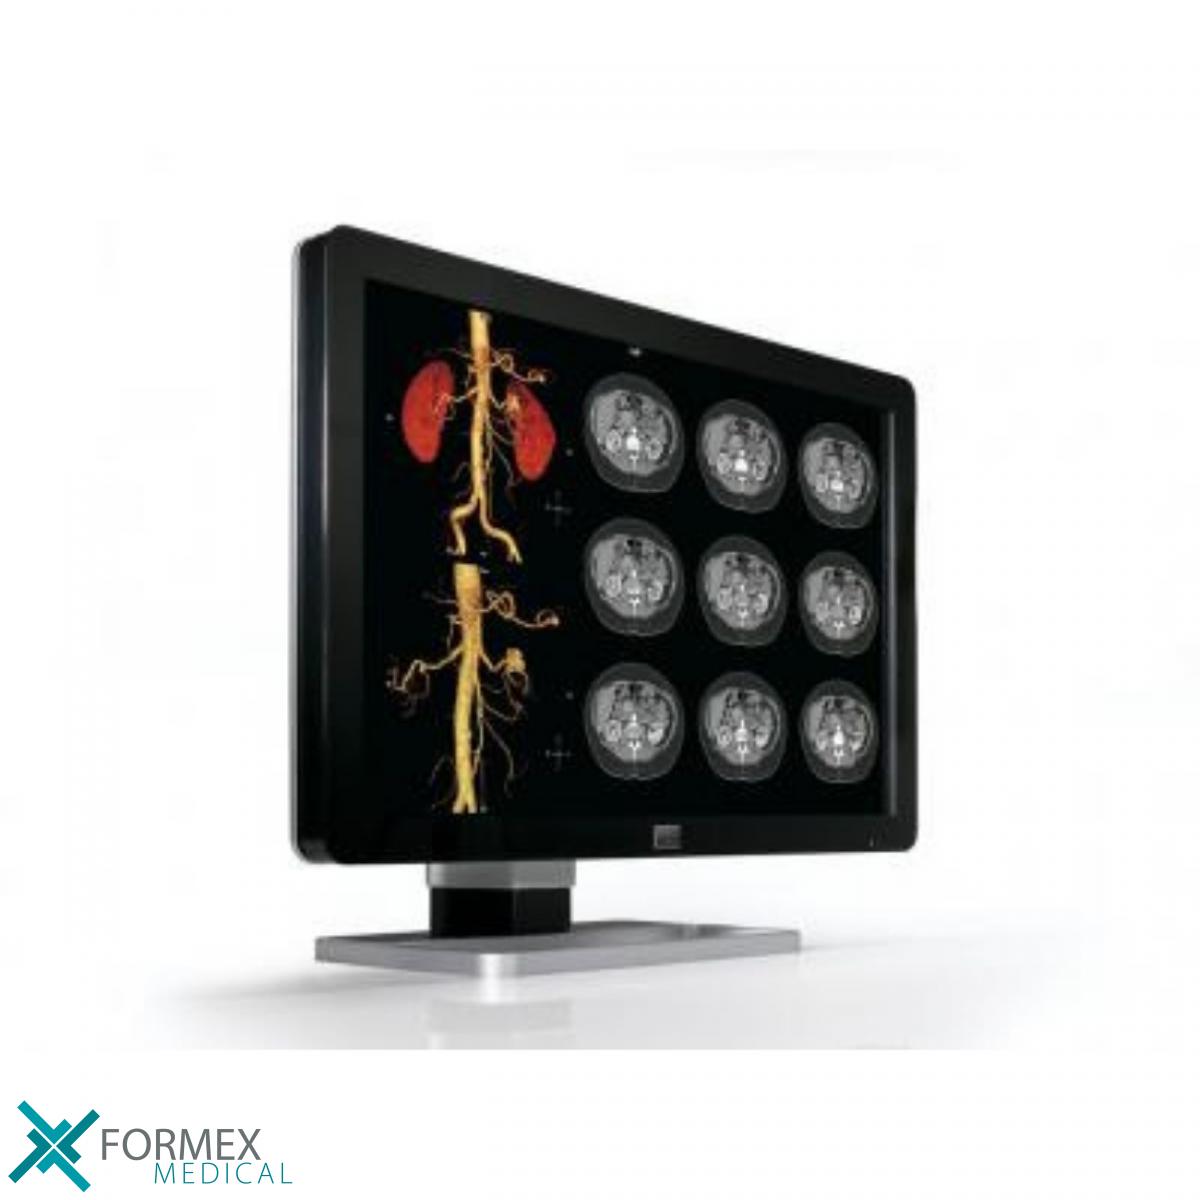 Barco Coronis Fusion 4MP (MDCC-4430), medical displays, medische schermen, eizo medical monitor, medische monitoren, eizo medical, medische beeldschermen, diagnostische monitoren, diagnostiek monitoren, eizo monitor